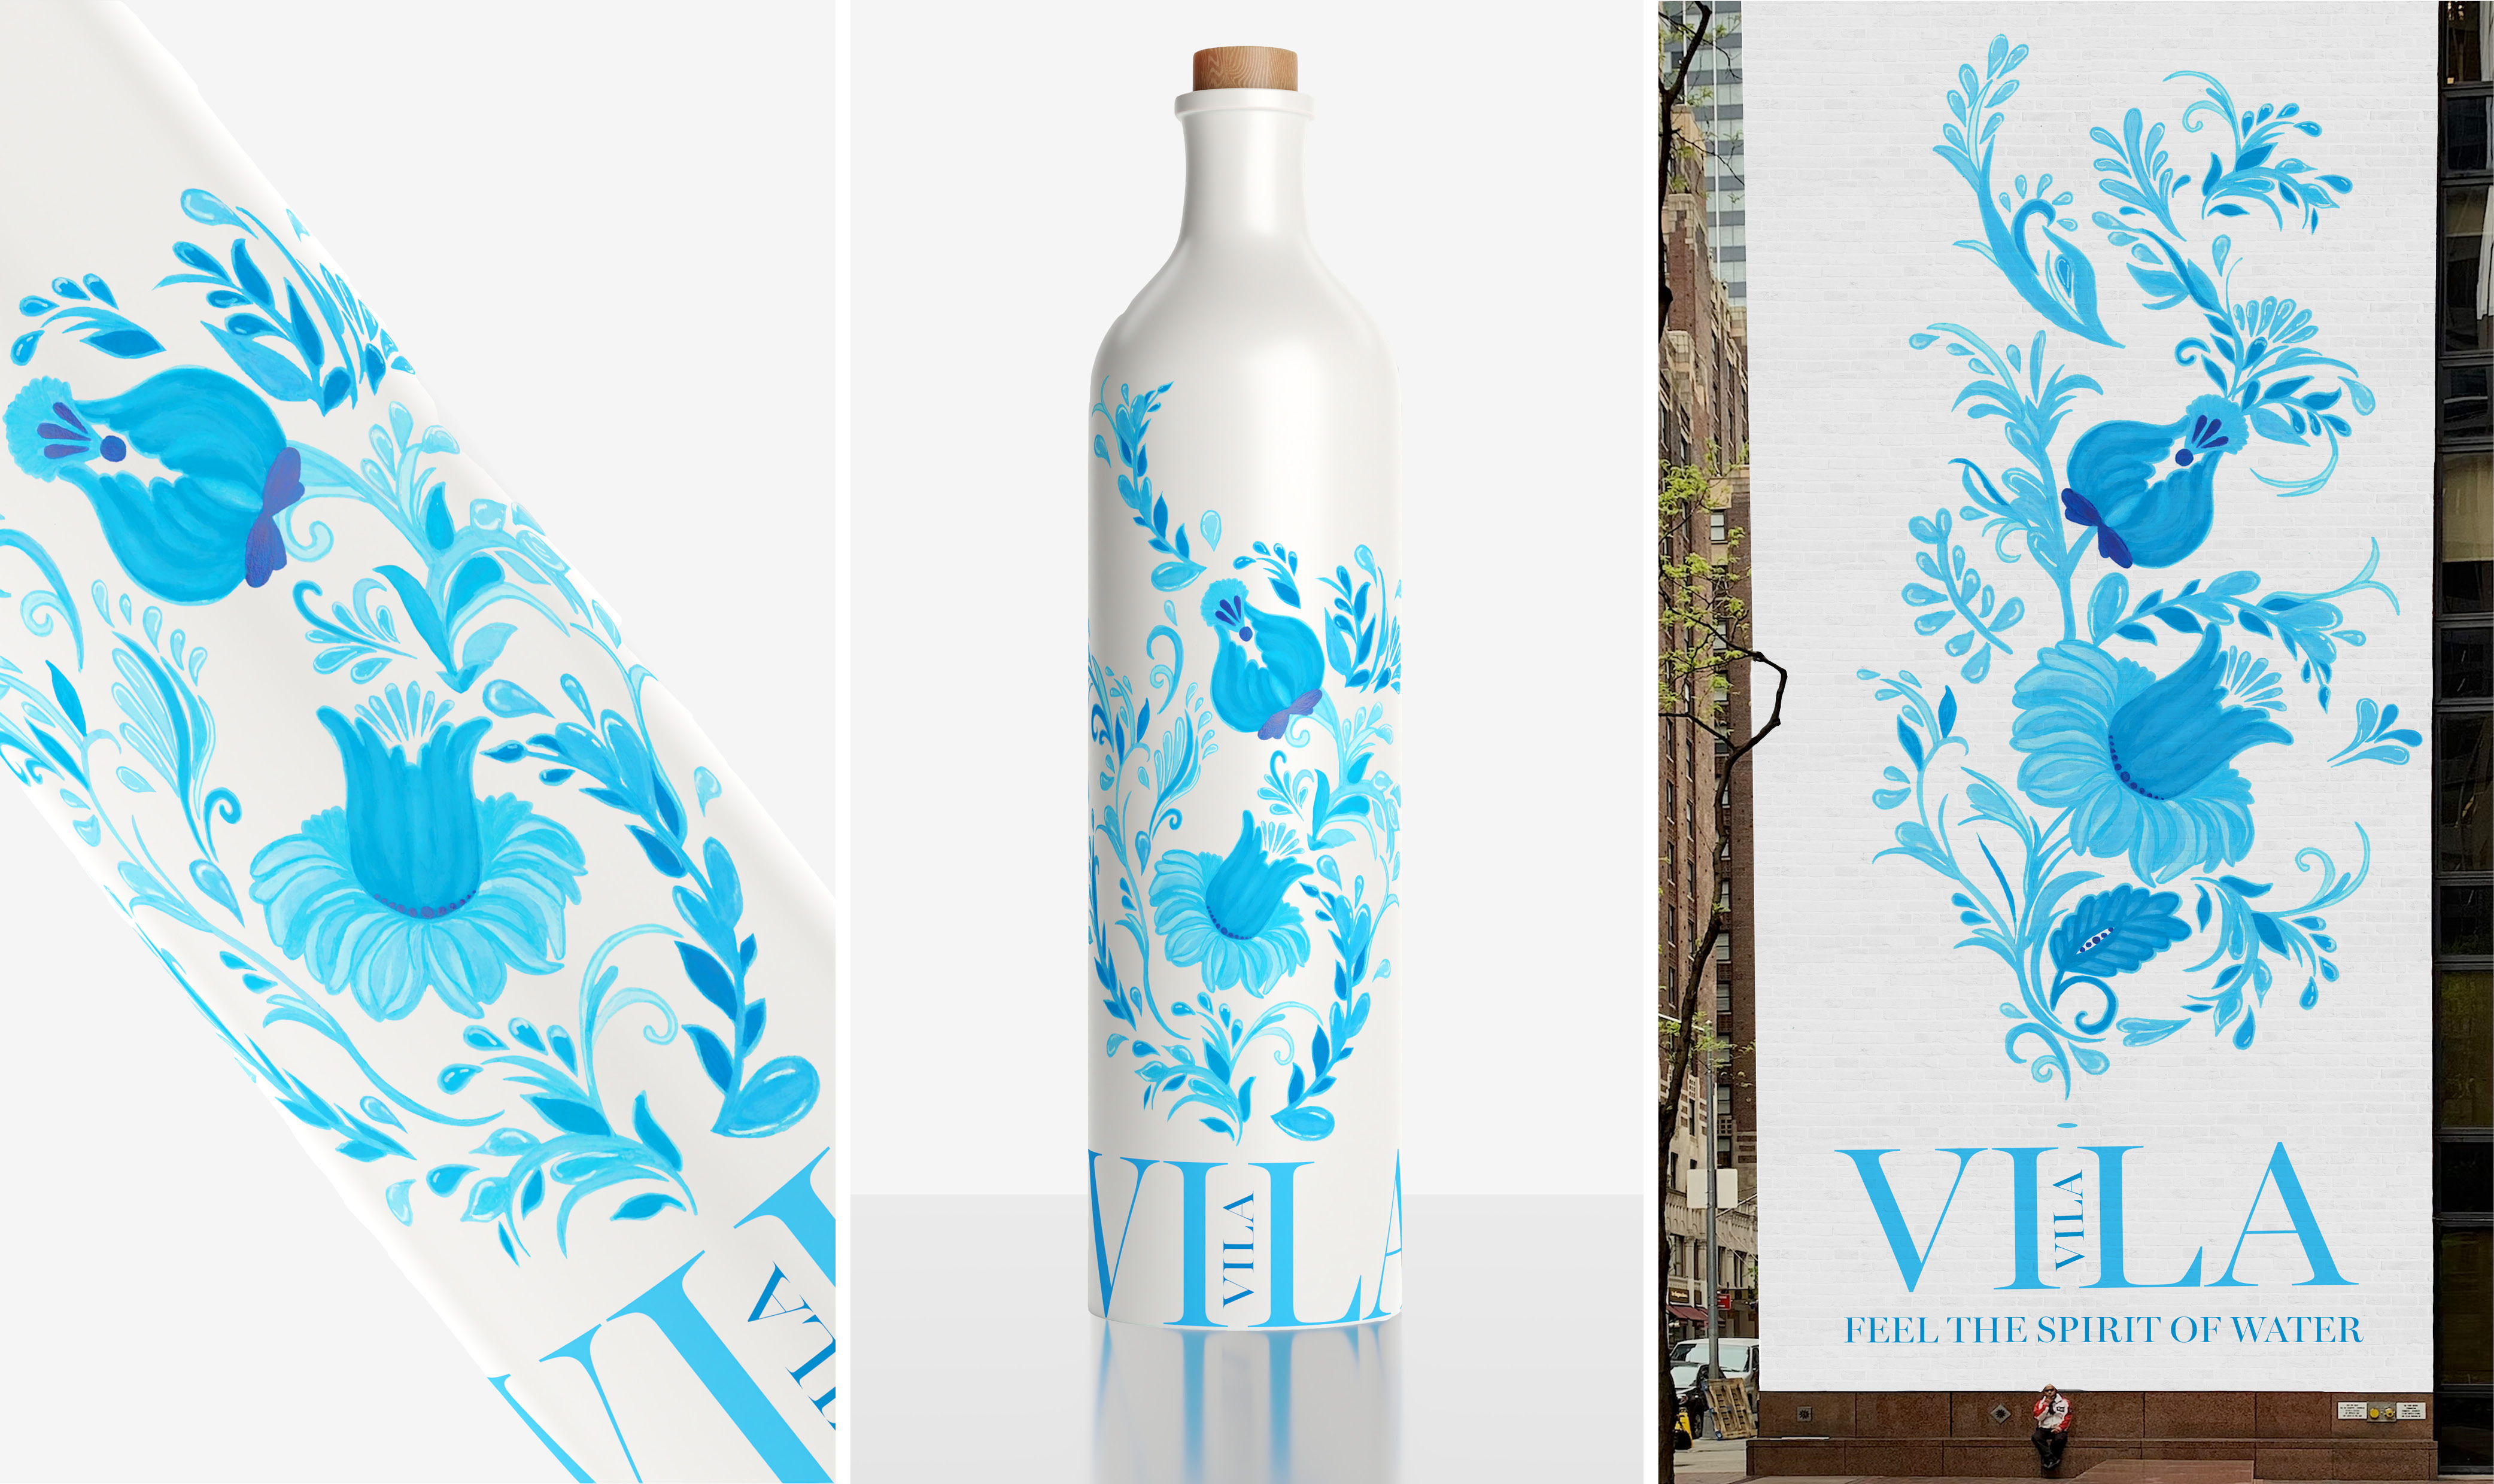 Graphic Design work by Magdalena Horos showing blender porcelain bottle renders and a flower mural in blue showcasing the Vila water spirit.